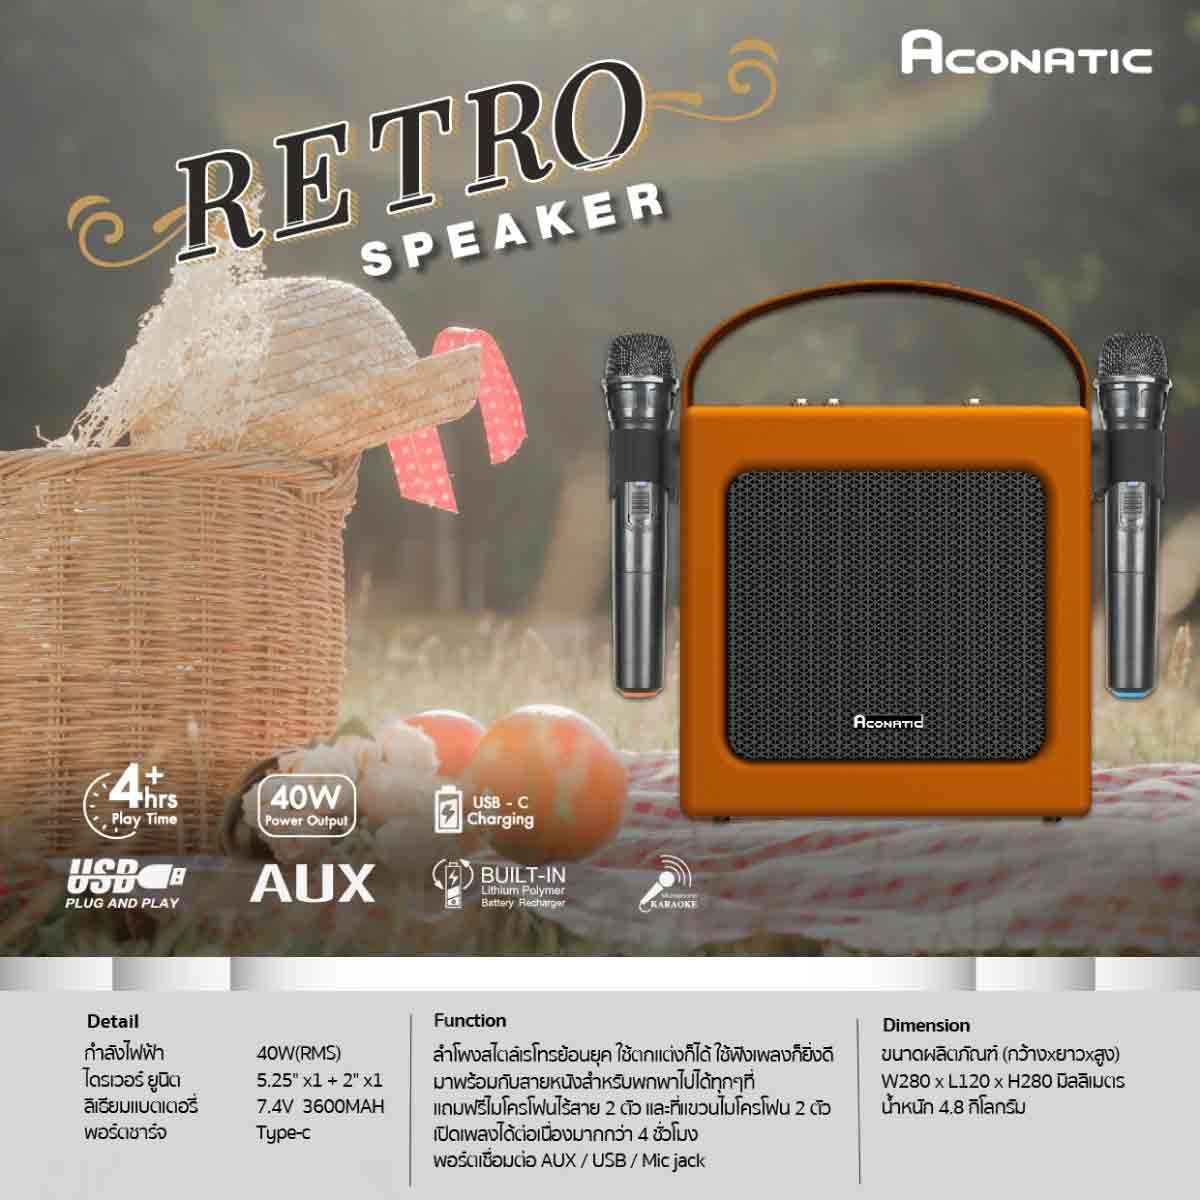 ACONATIC ชุดลำโพง Retro Speaker กำลังขับ 40W รุ่น AN-RT401 พร้อมแถมไมโครโฟน